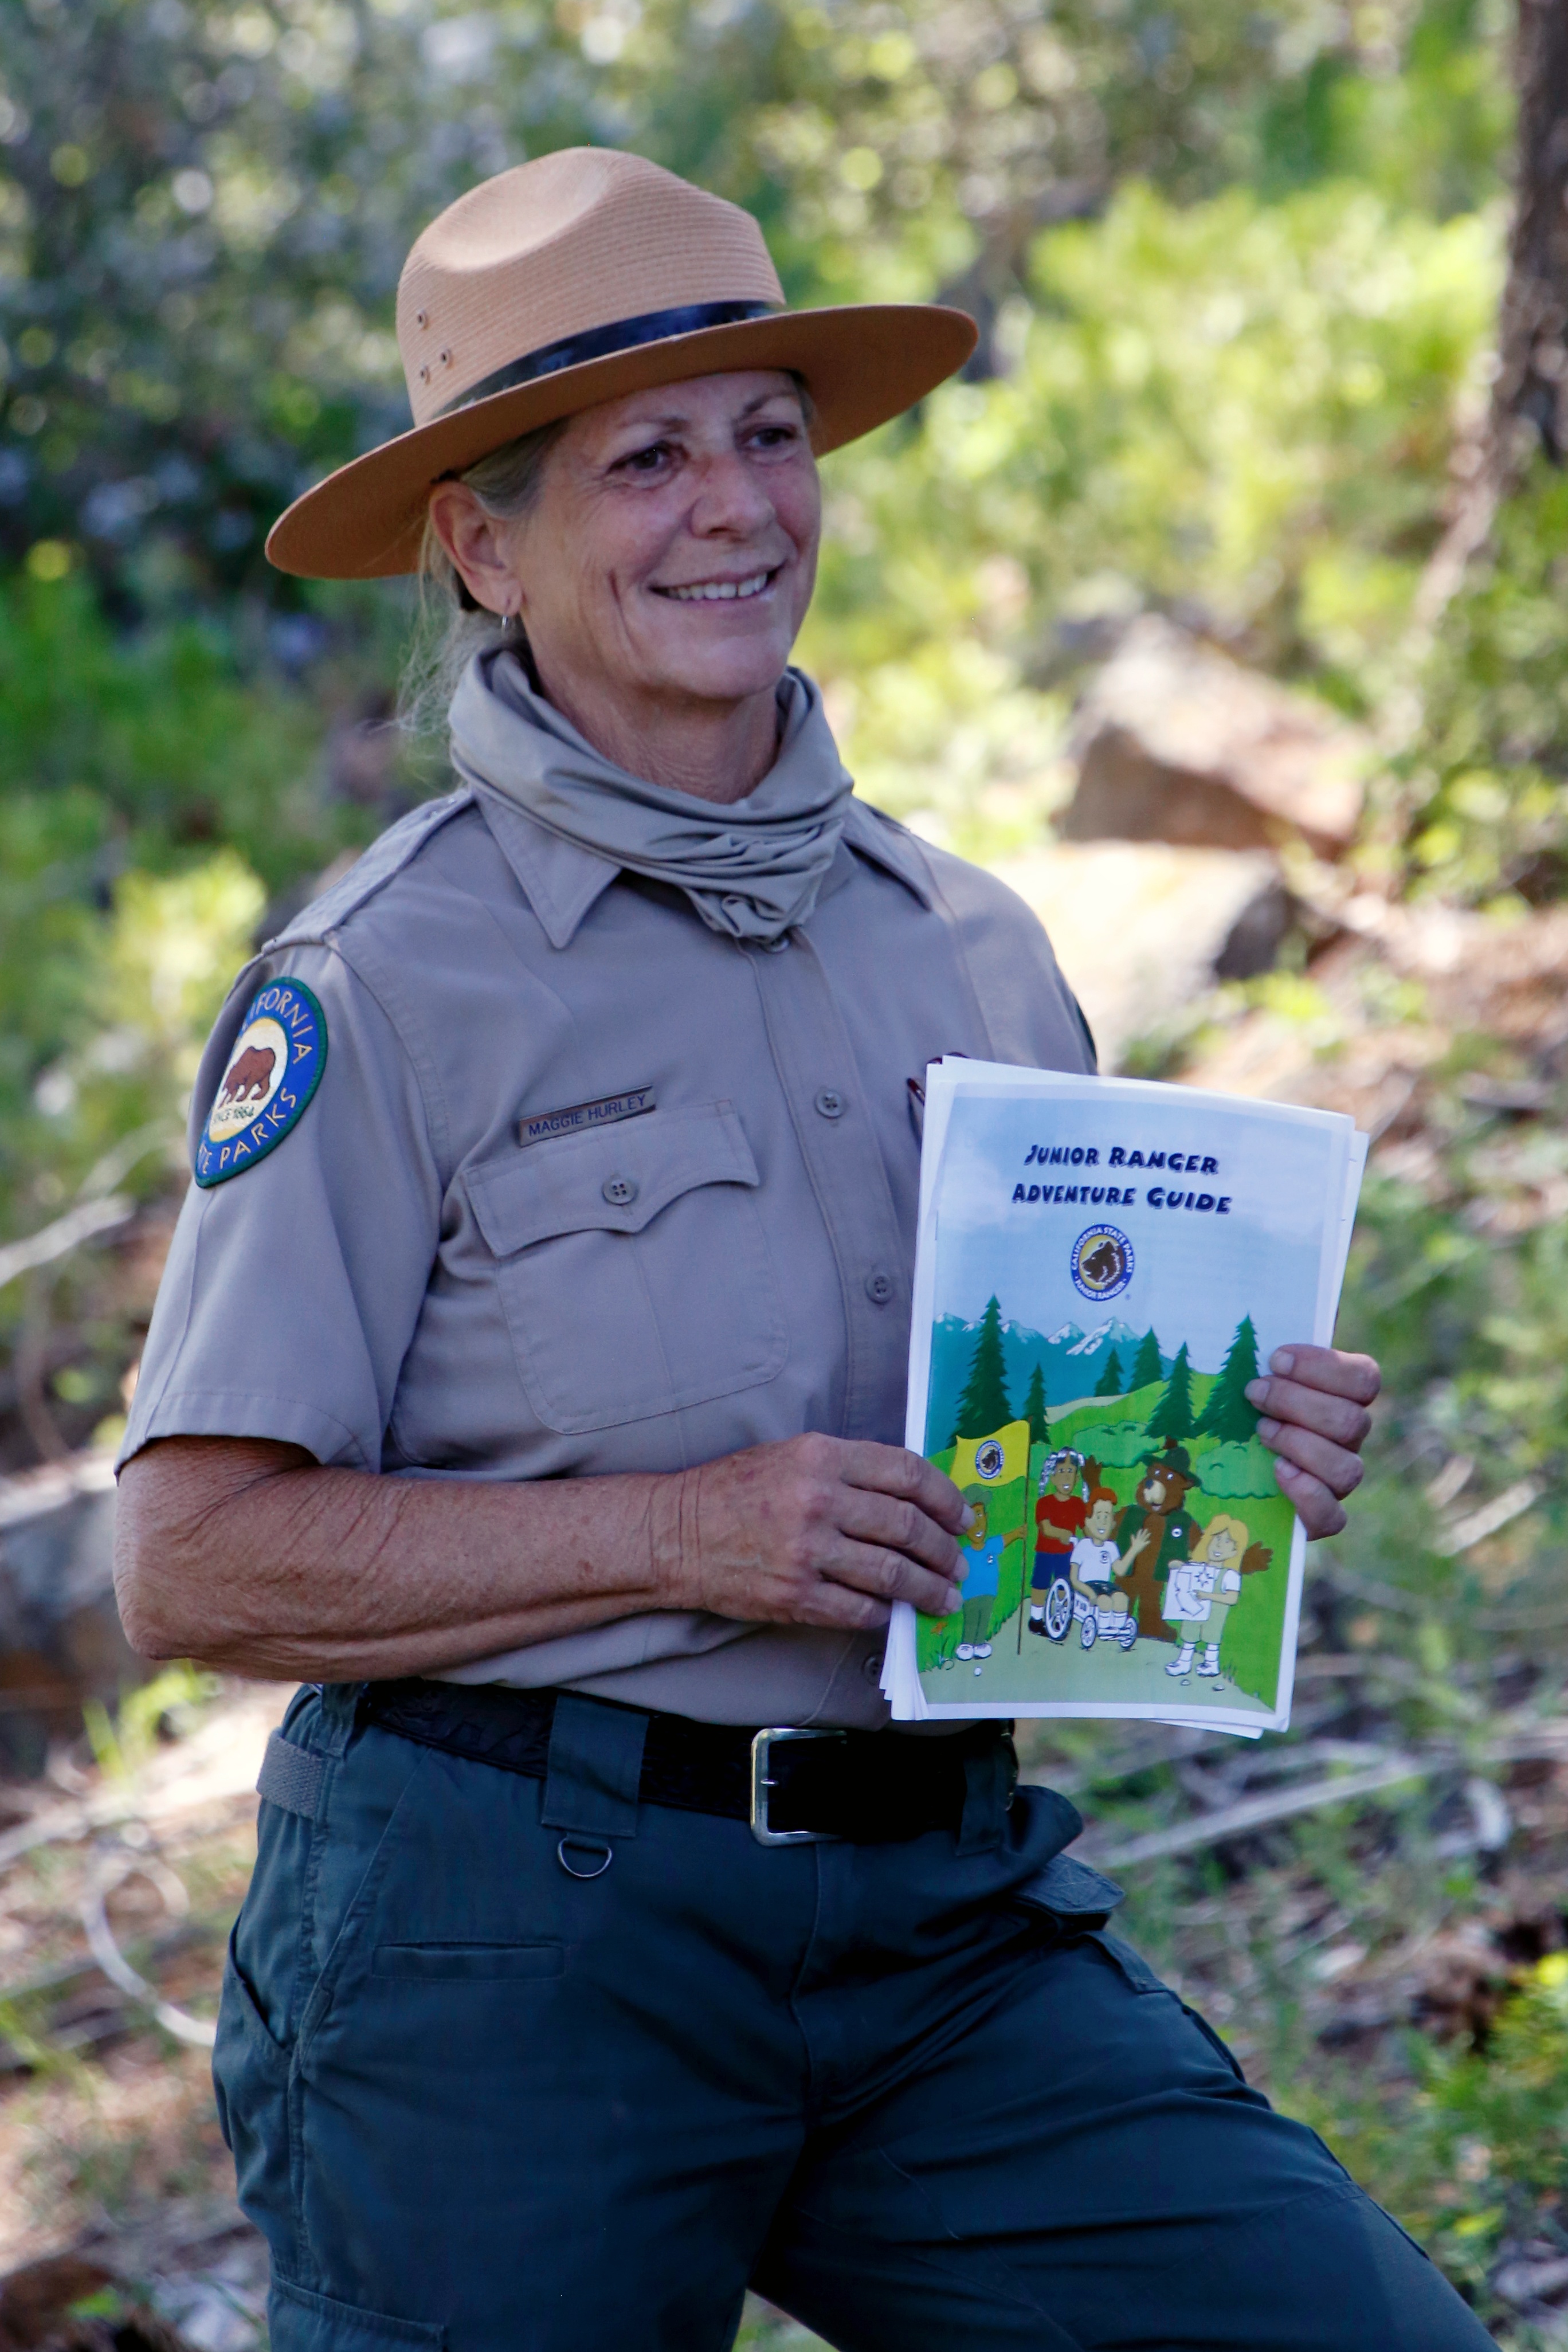 State Park Interpreter holding Junior Ranger Activity Guide